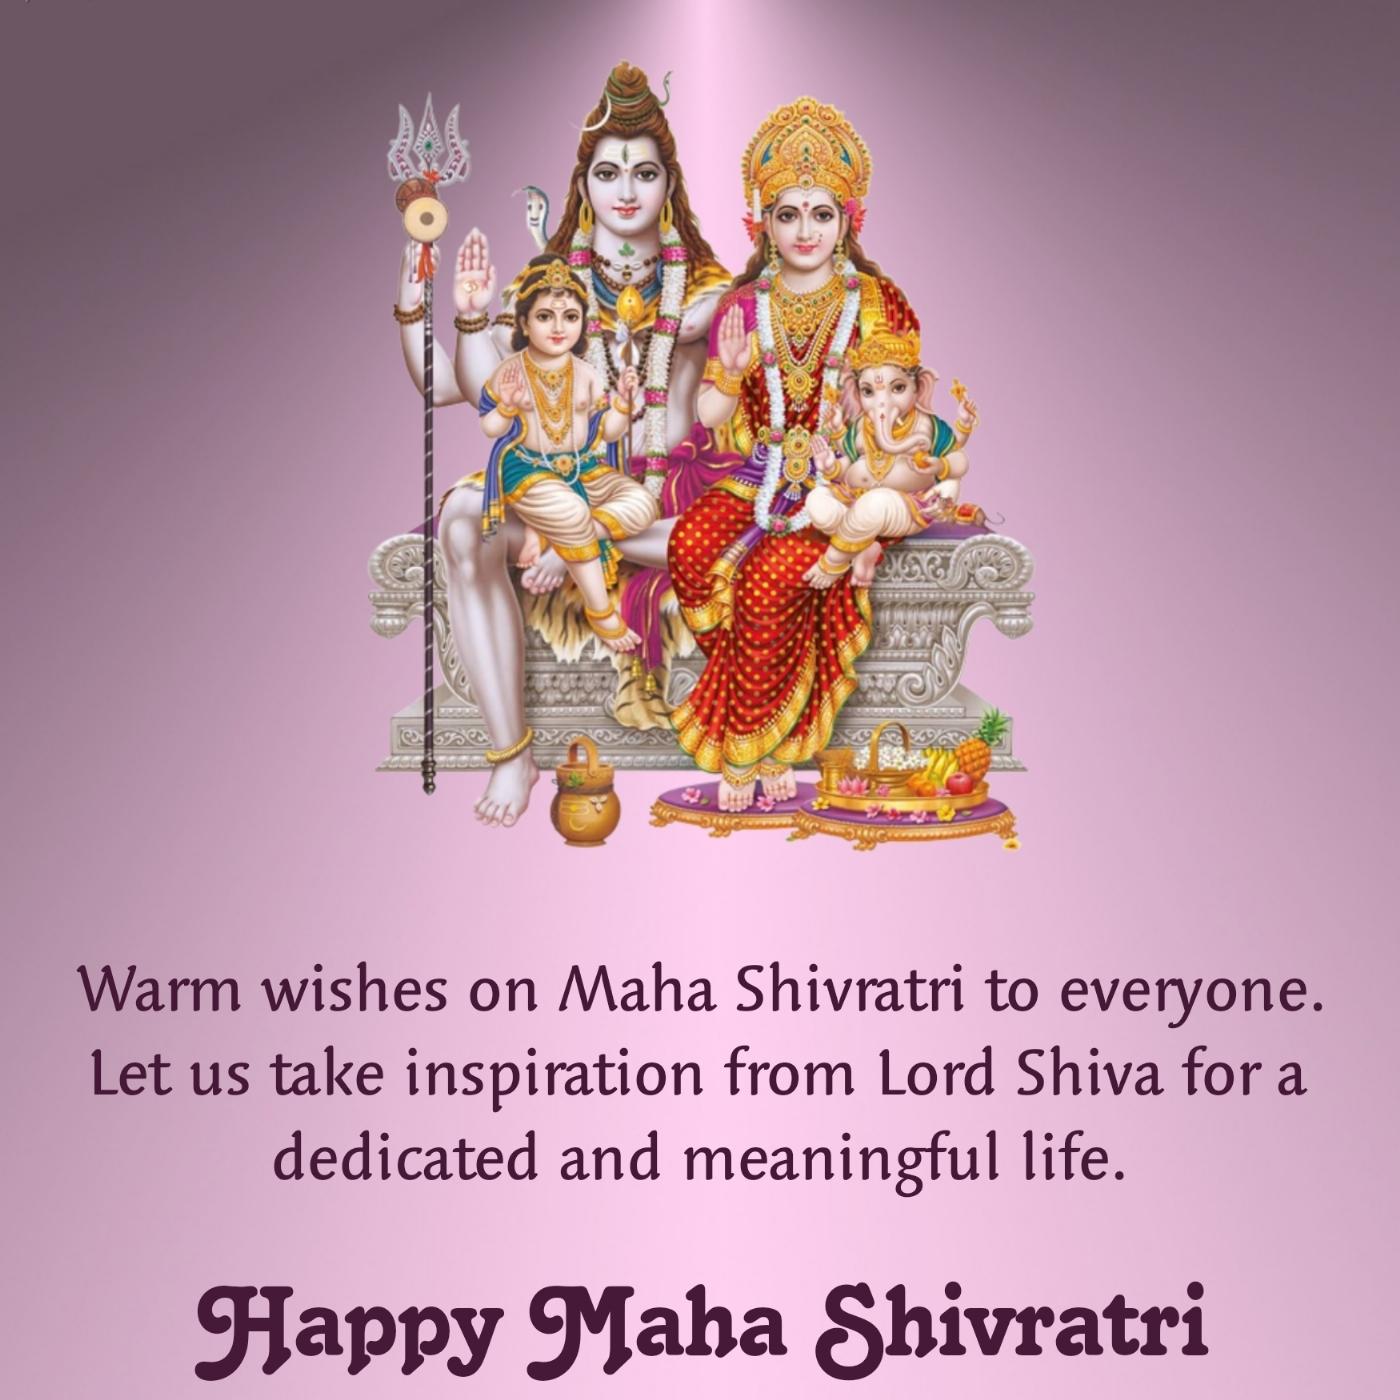 Warm wishes on Maha Shivratri to everyone